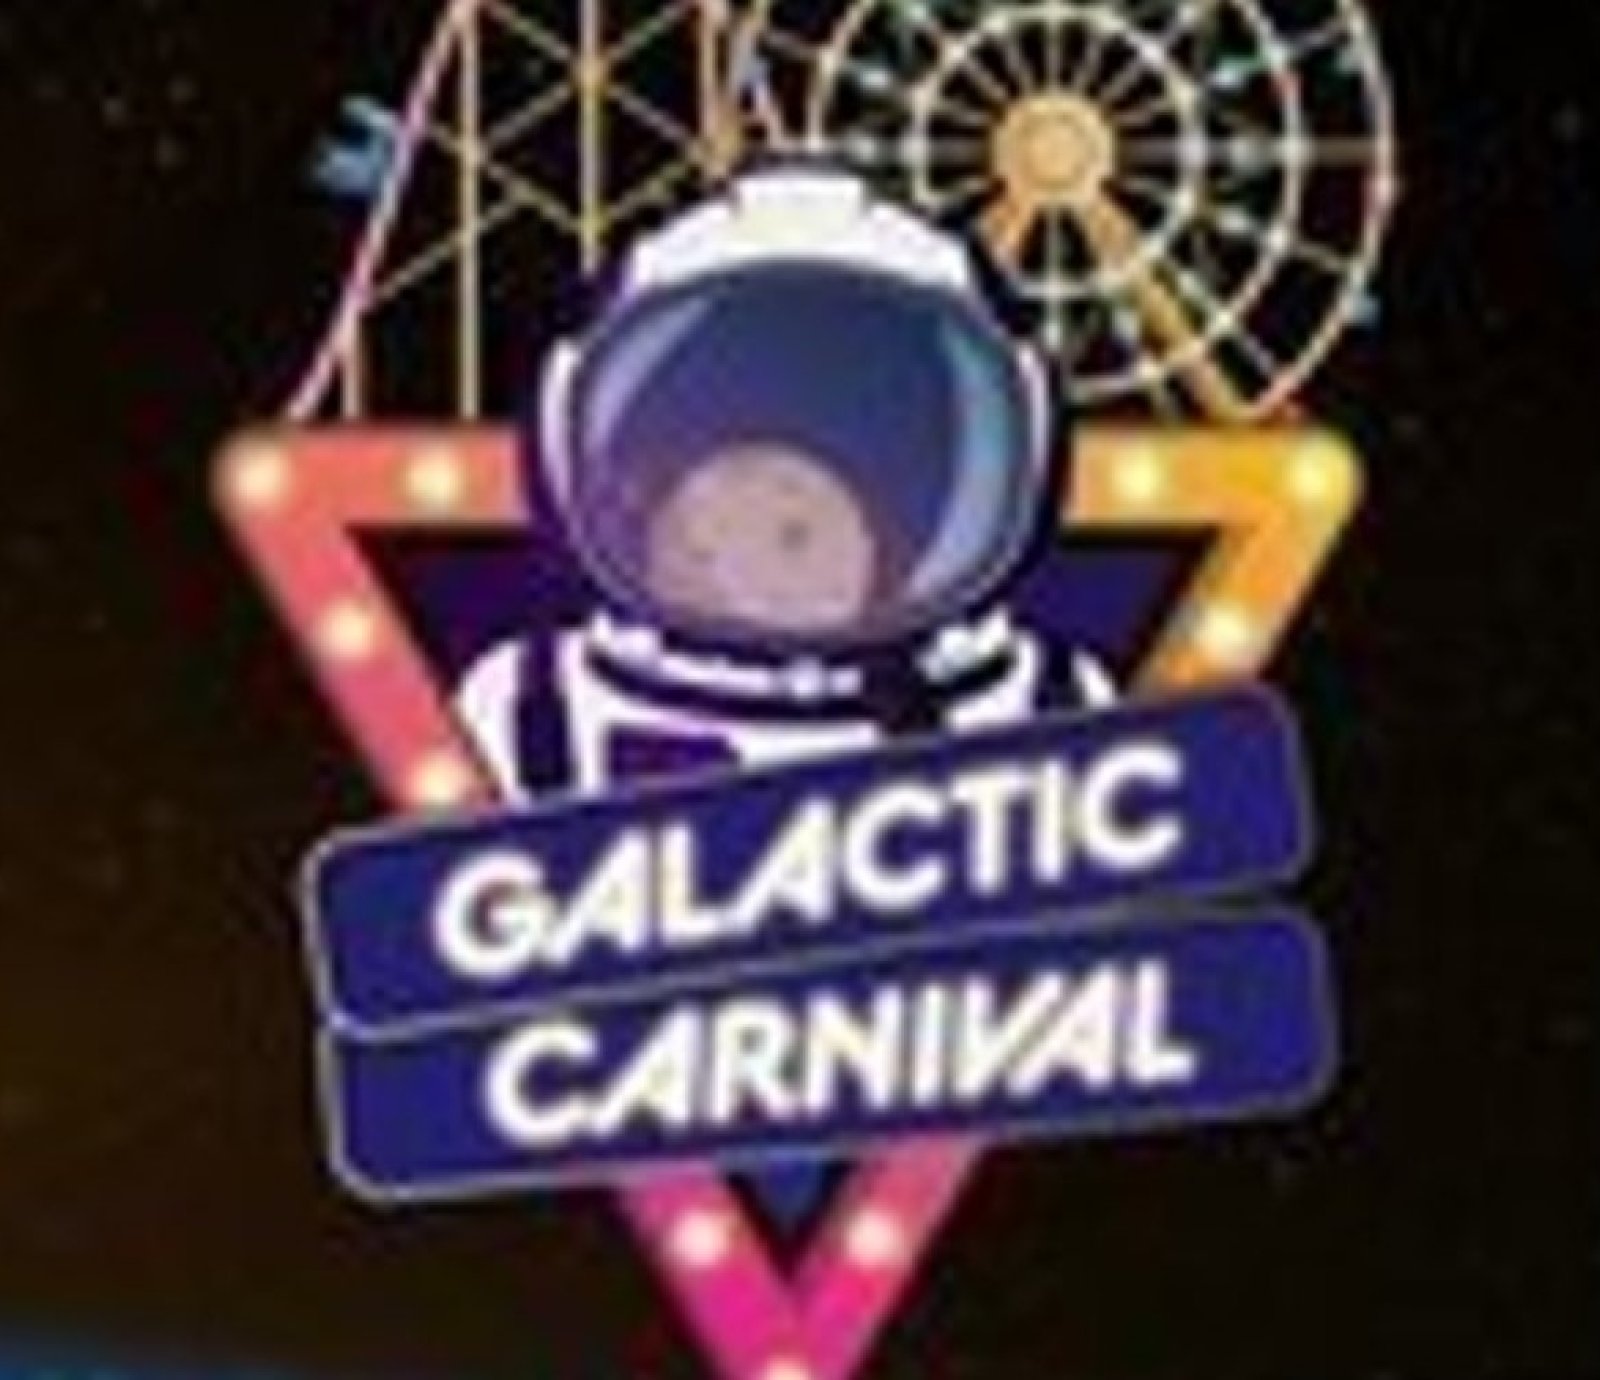 Galactic Carnival